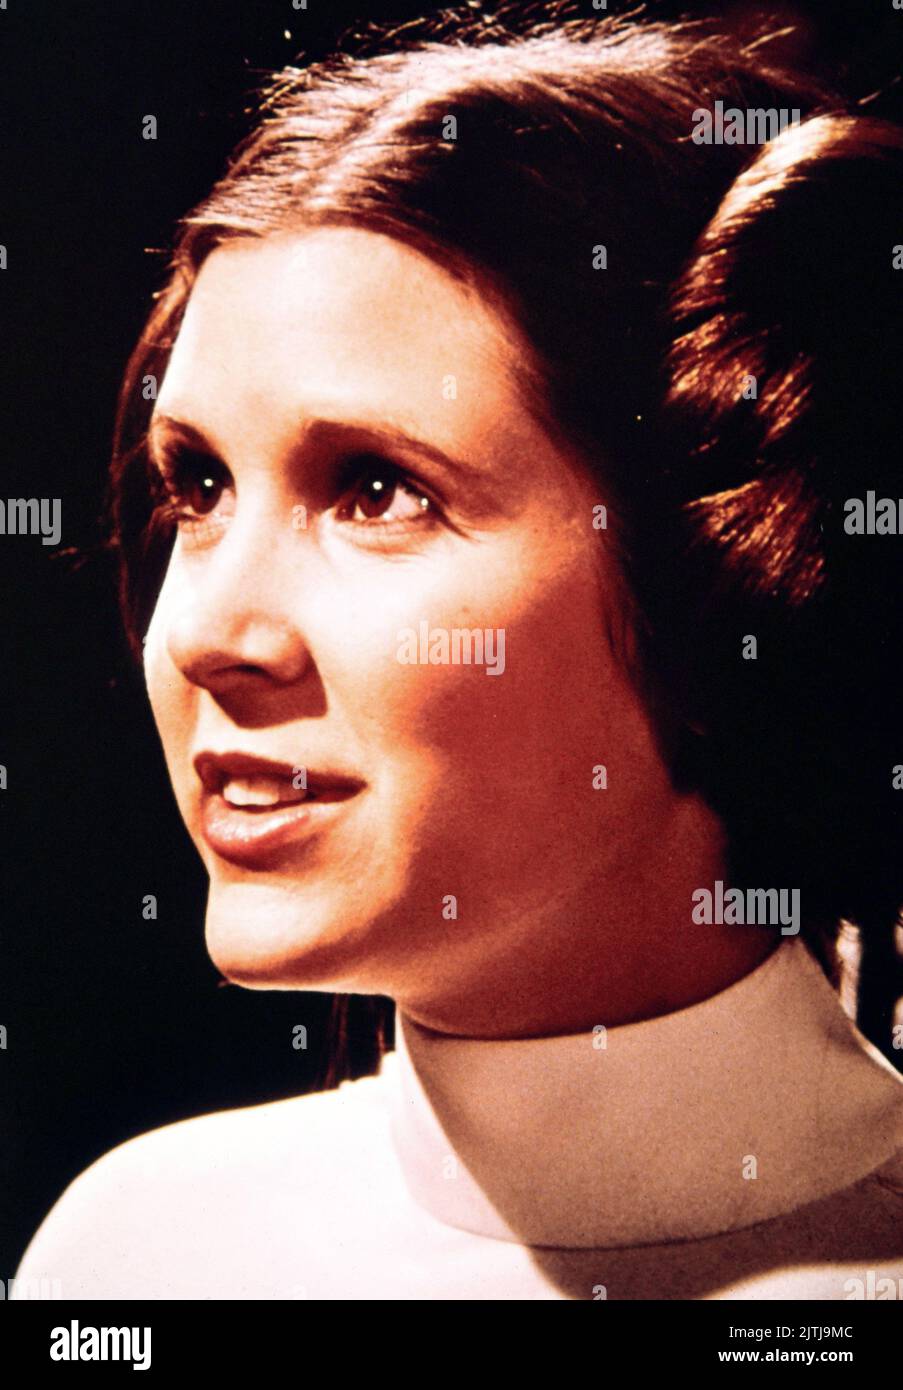 Star Wars, alias Krieg der Sterne, Etats-Unis 1977, Regie: George Lucas, Darsteller: Carrie Fisher Banque D'Images